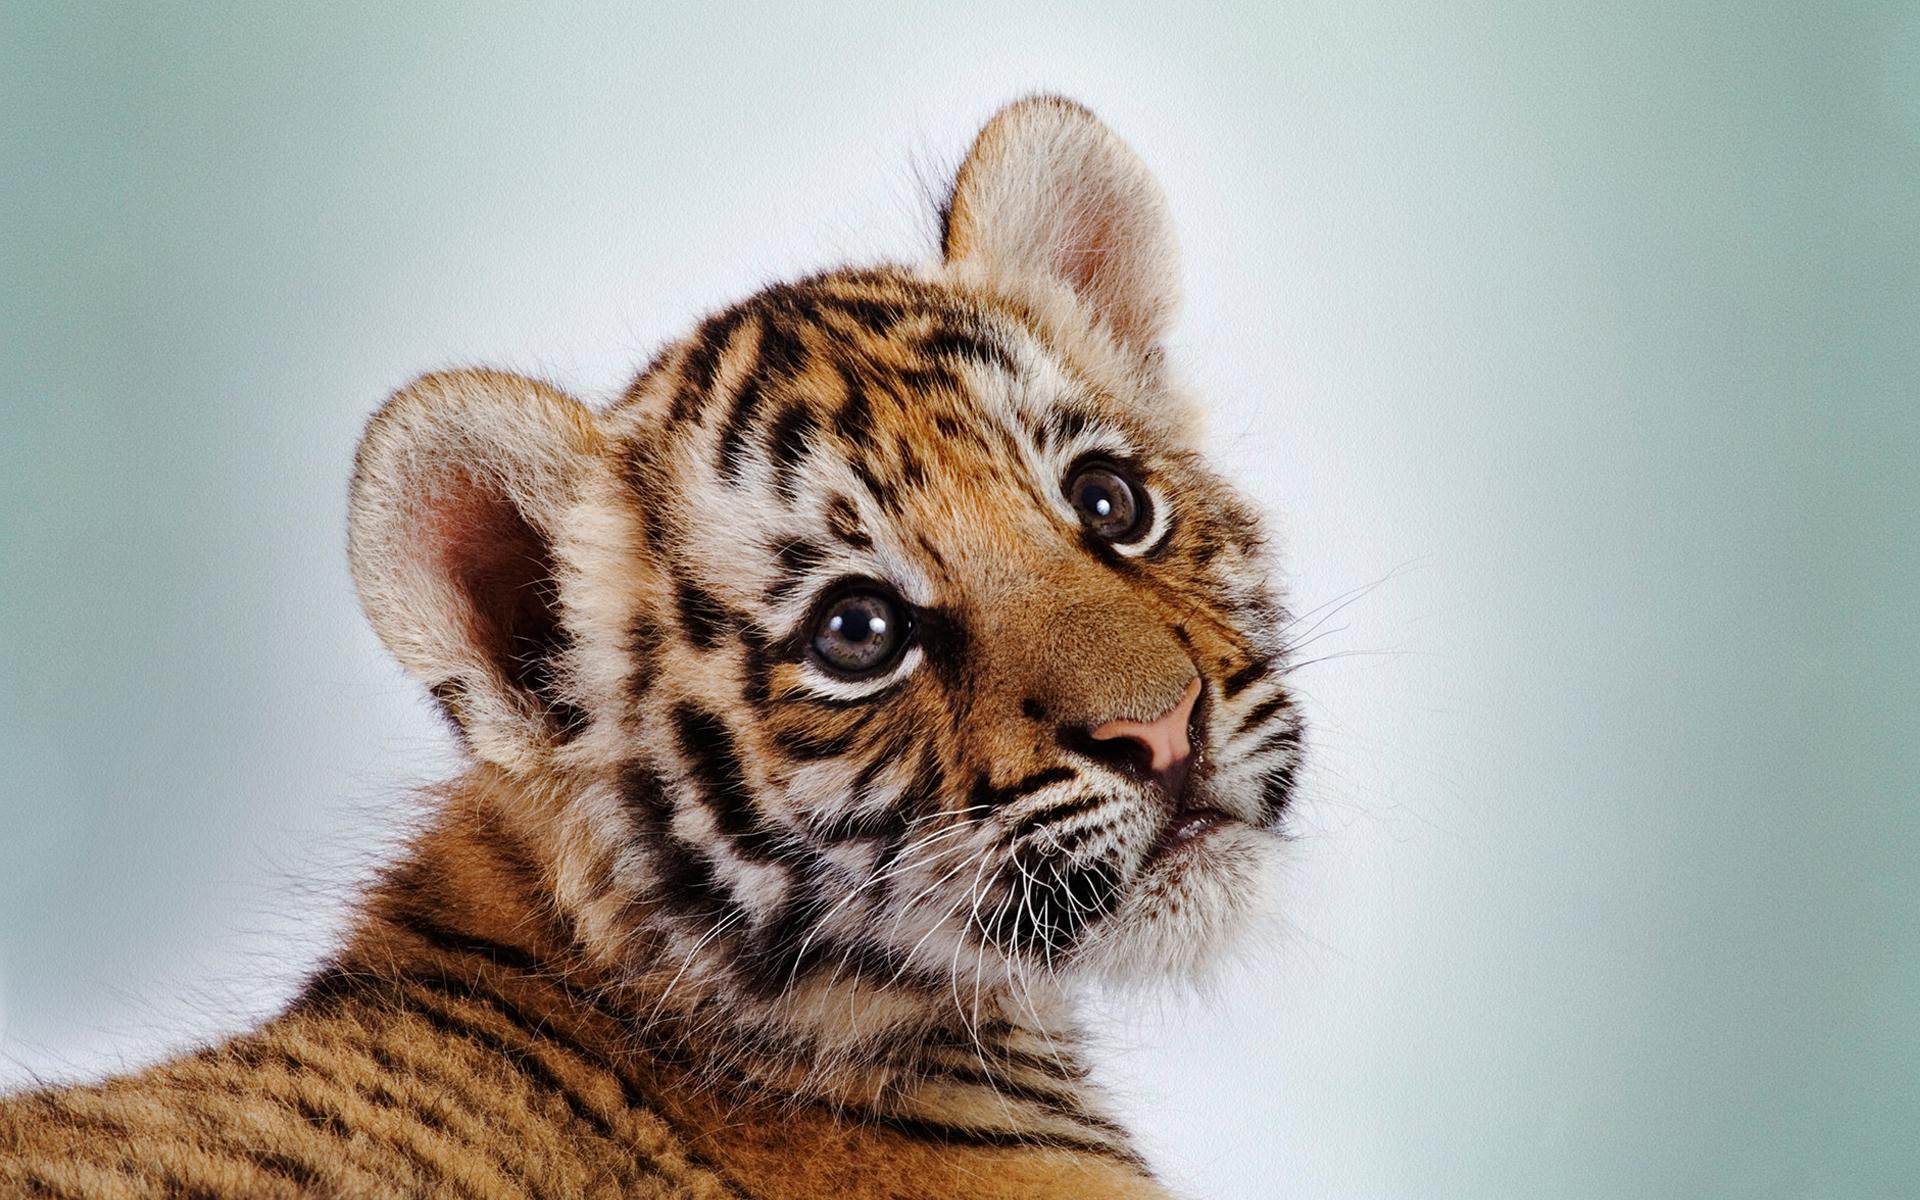 Tiger baby wallpaper